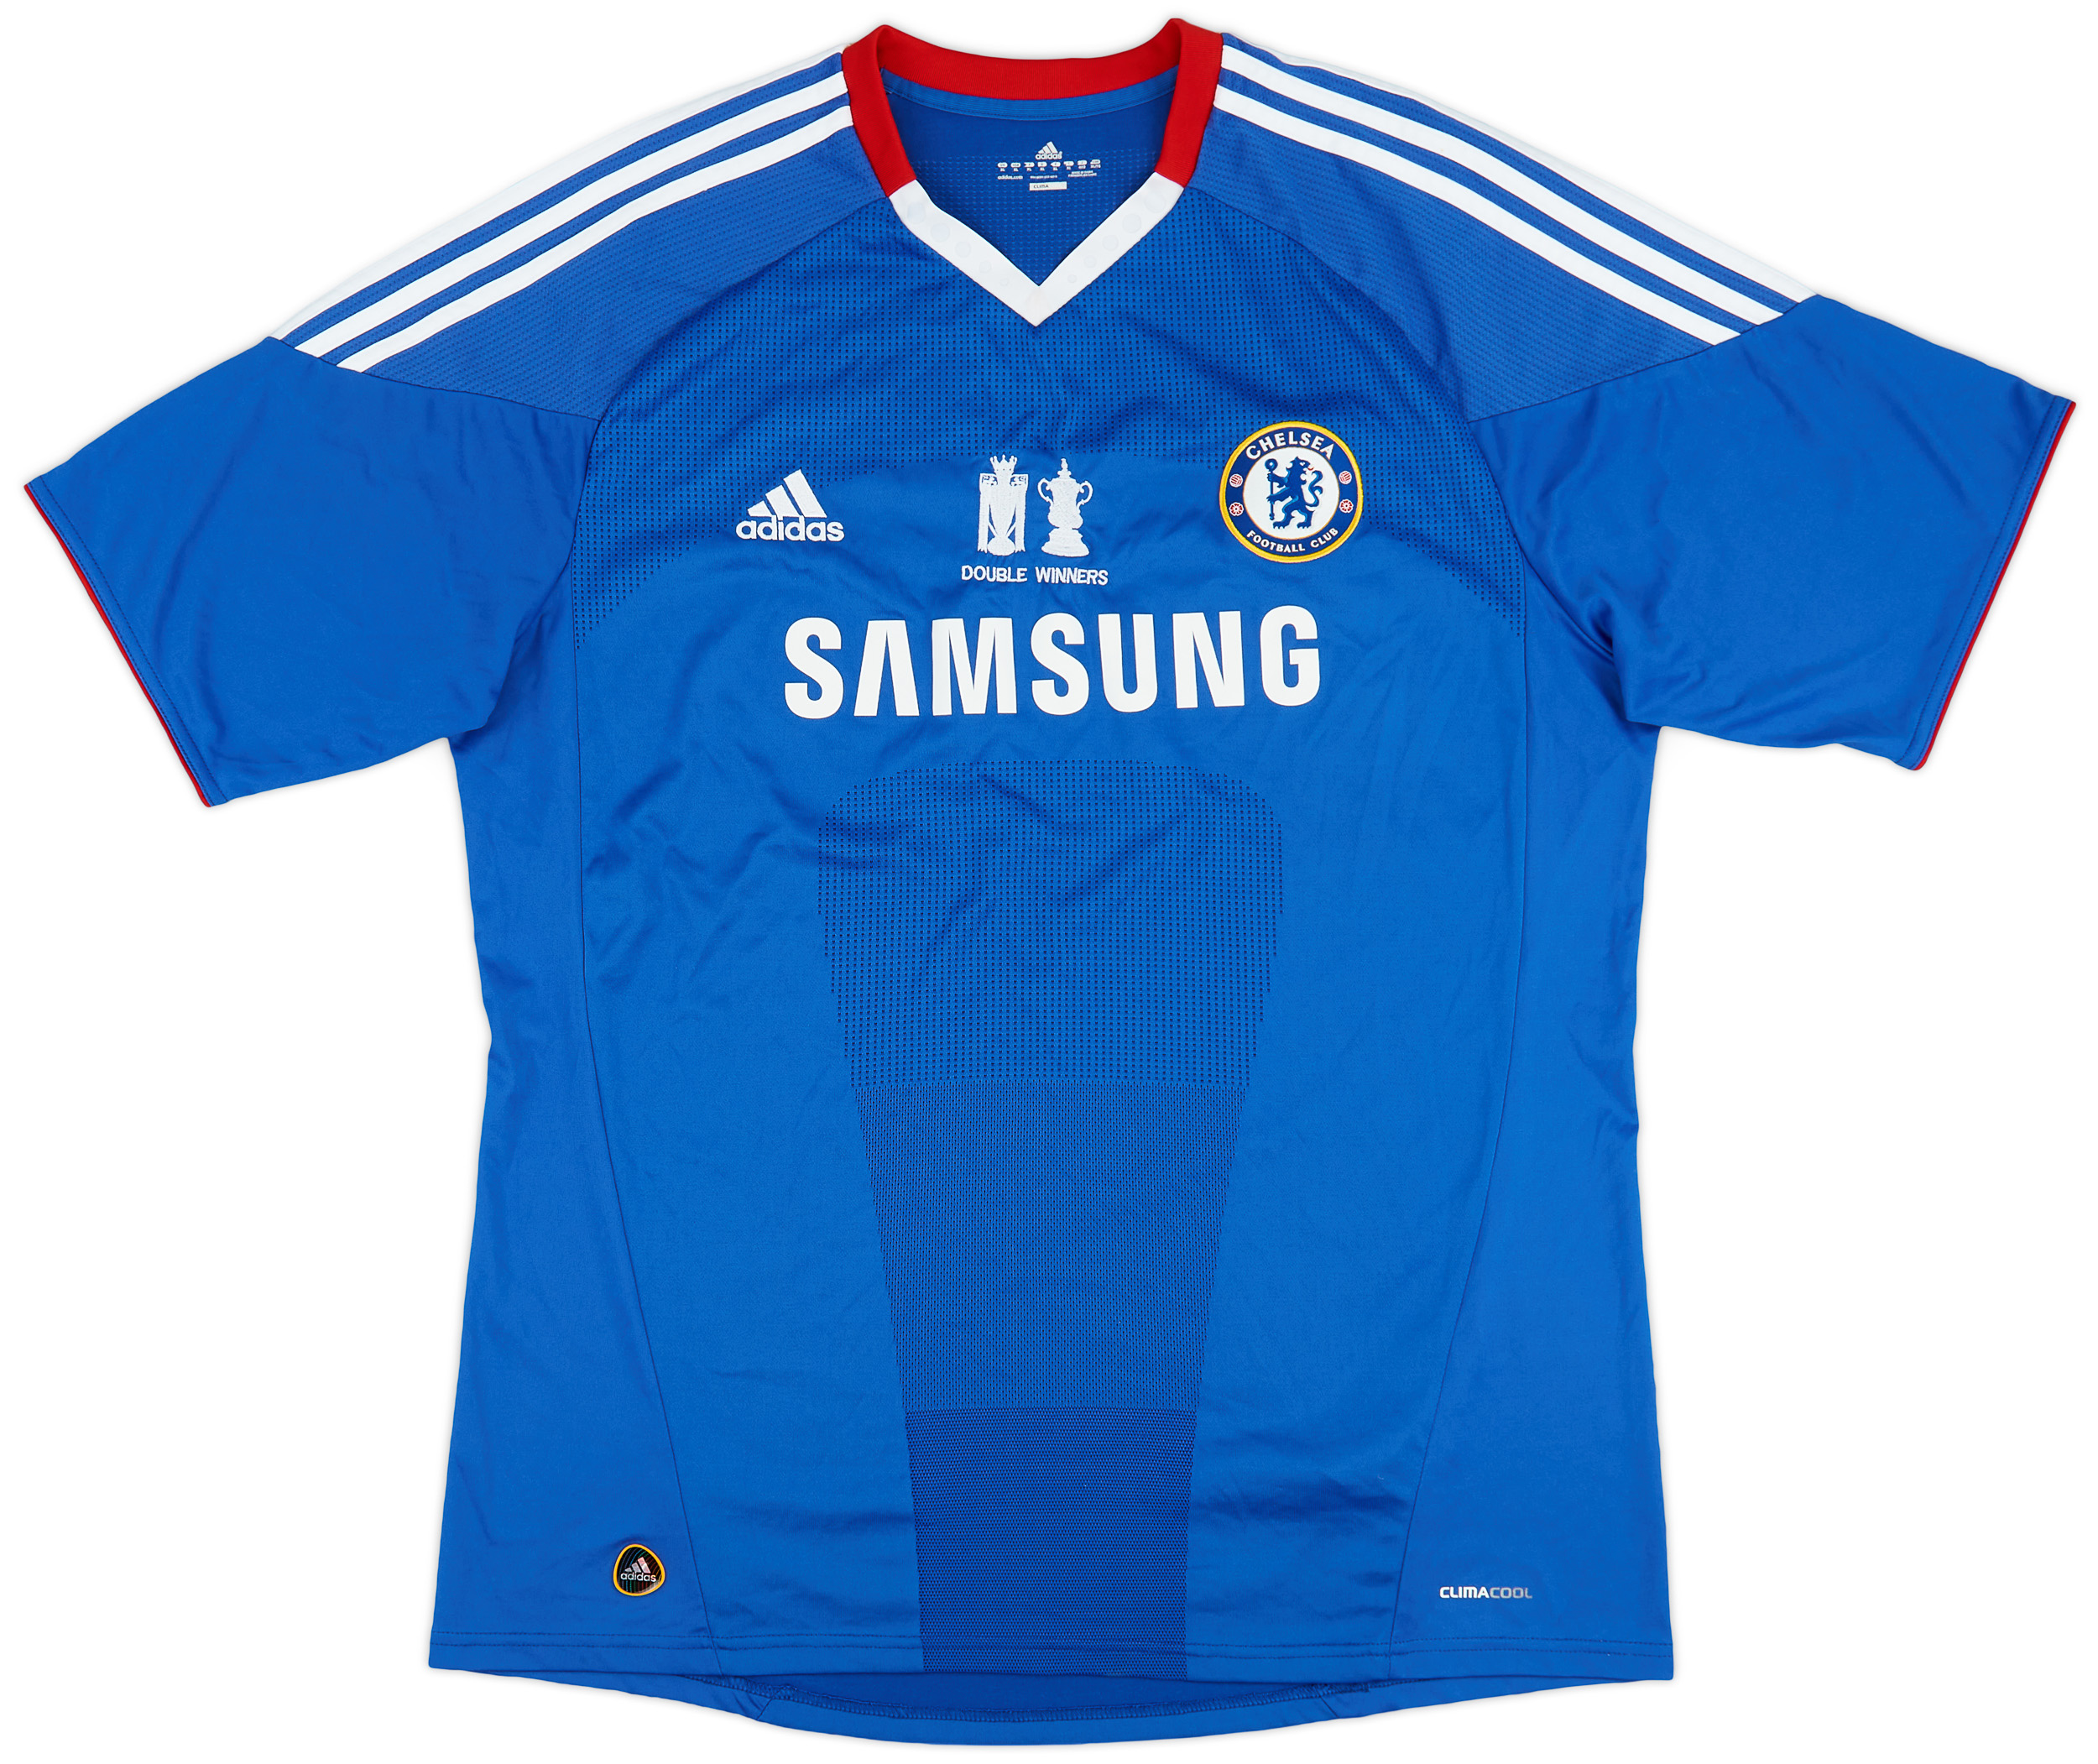 2010-11 Chelsea 'Double Winners' Home Shirt - 9/10 - ()